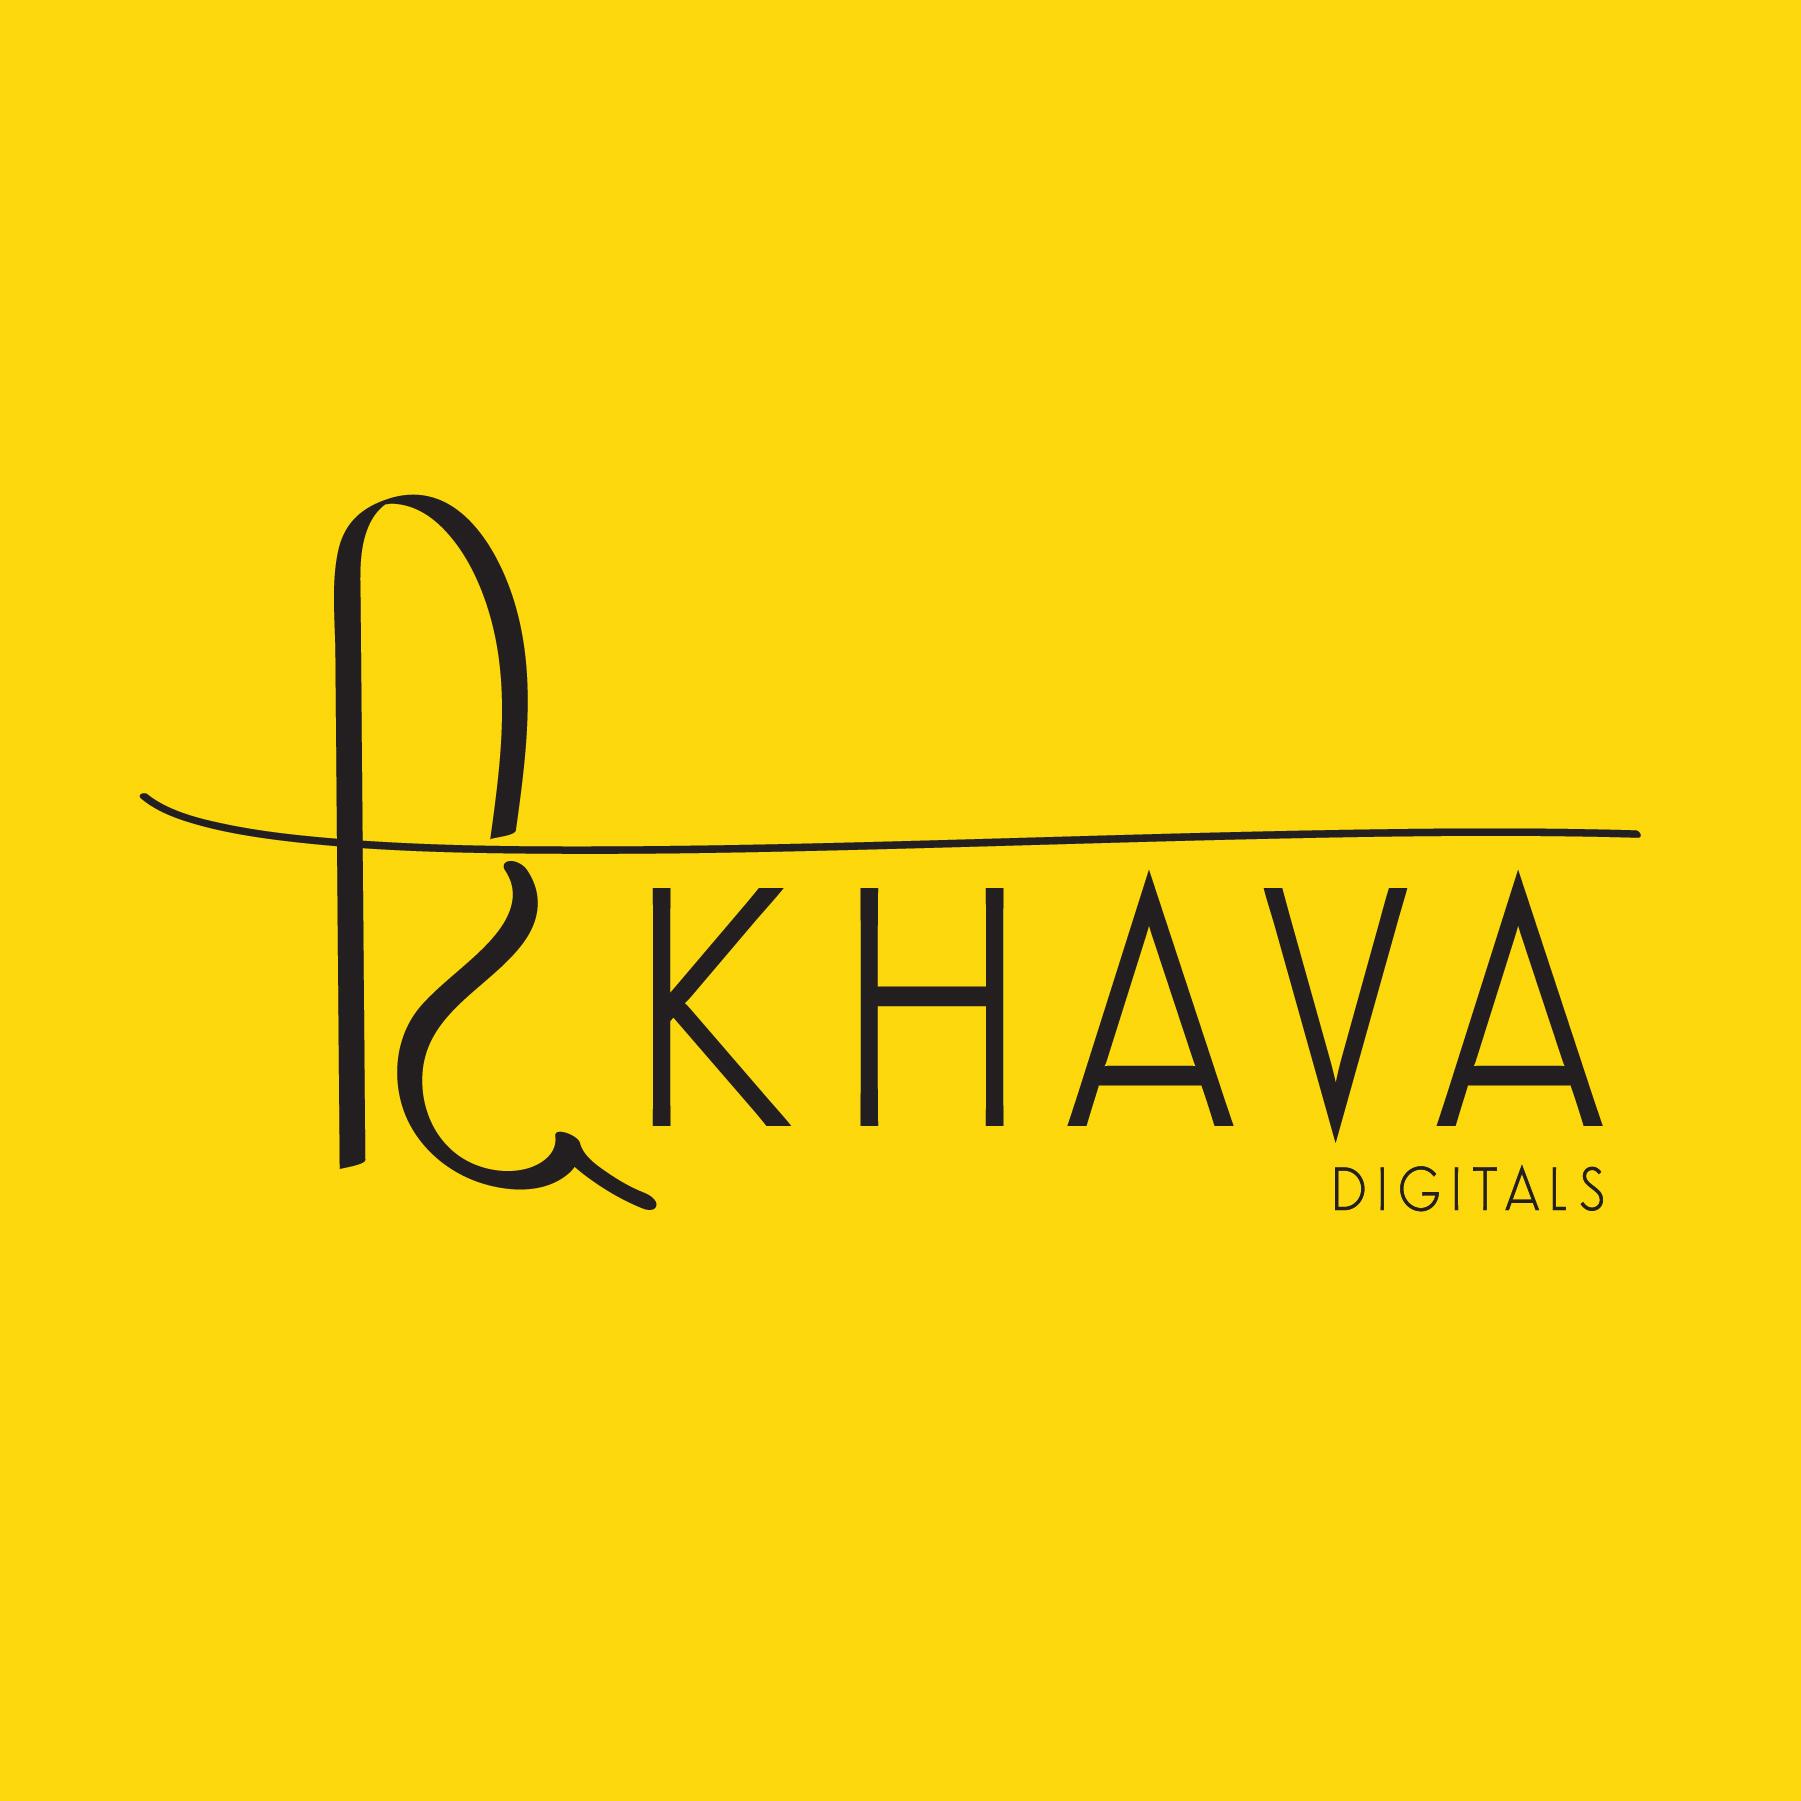 Best Logo Design Services In Pune by ankitamondal on DeviantArt